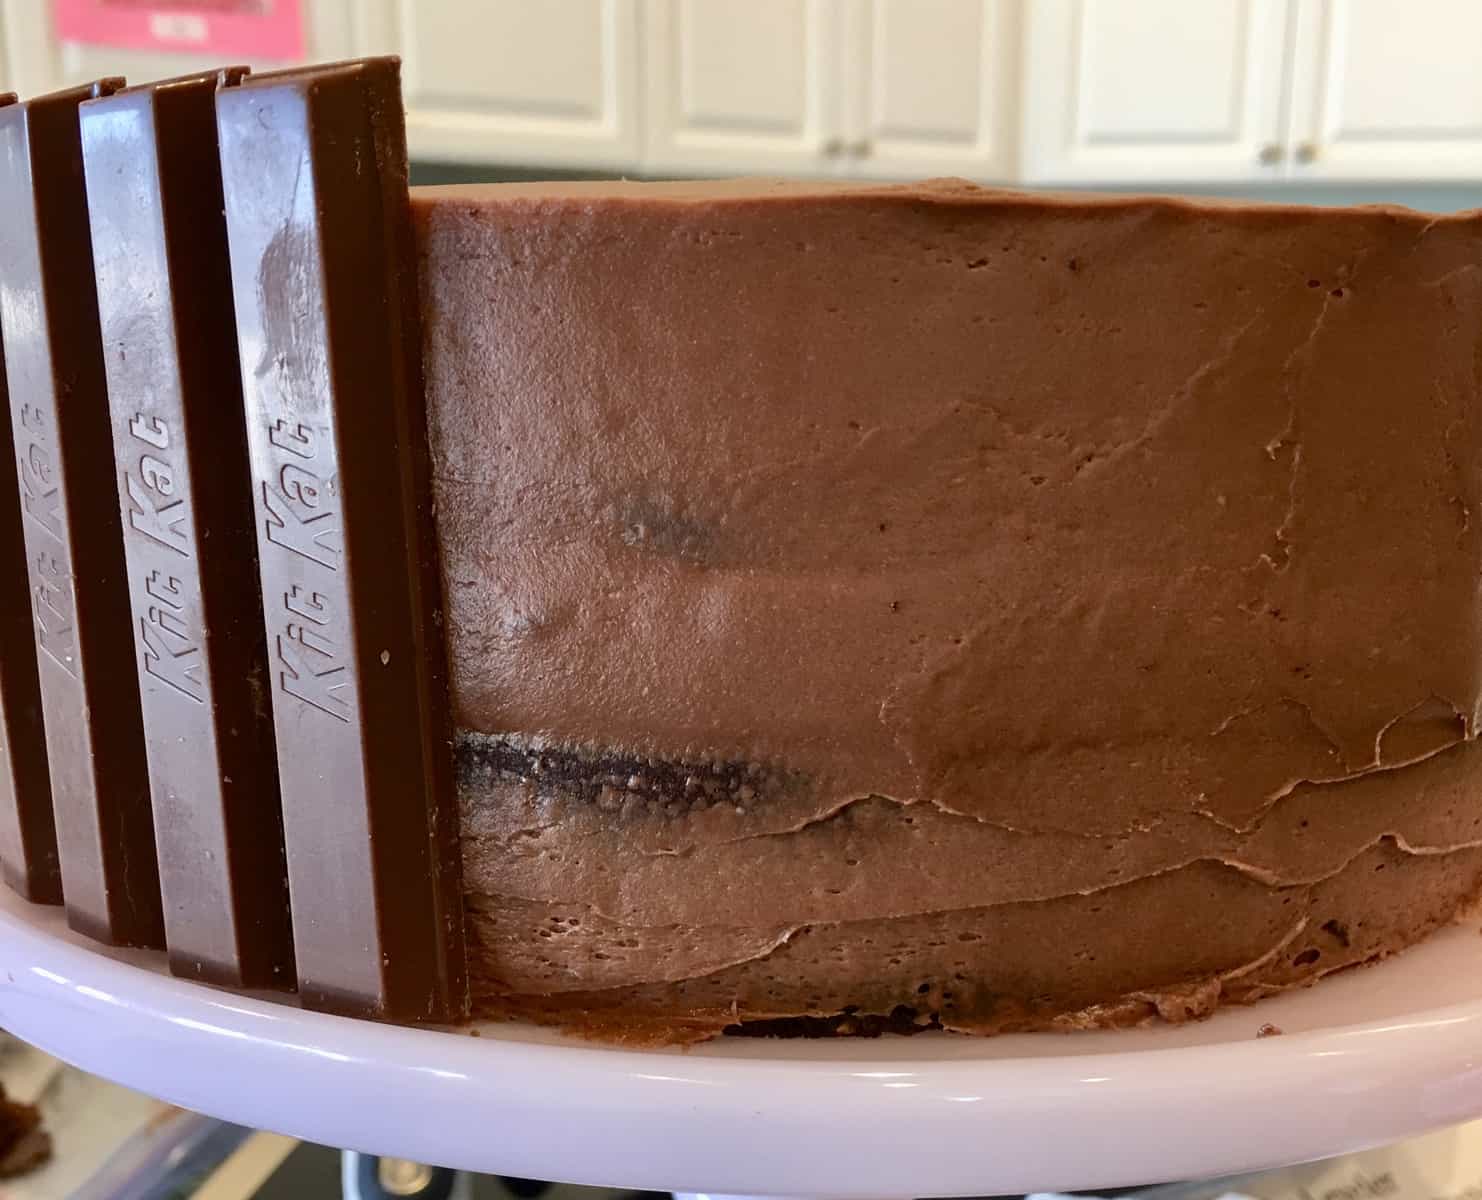 chocolate cake with Kit Kat bars stuck along of the side